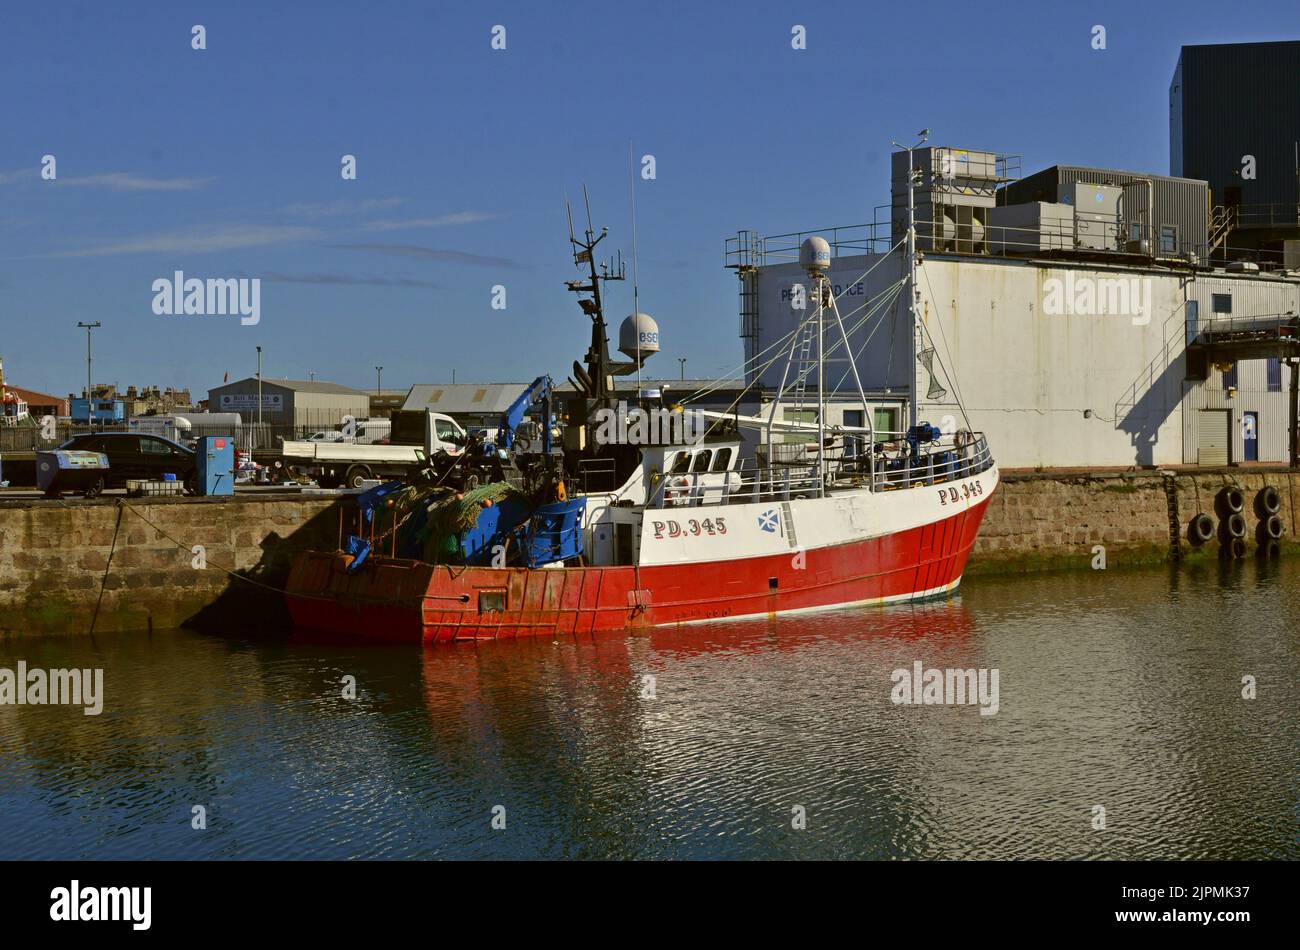 Harbour scene in the major fishing port of Peterhead in Aberdeenshire, Scotland, UK Stock Photo